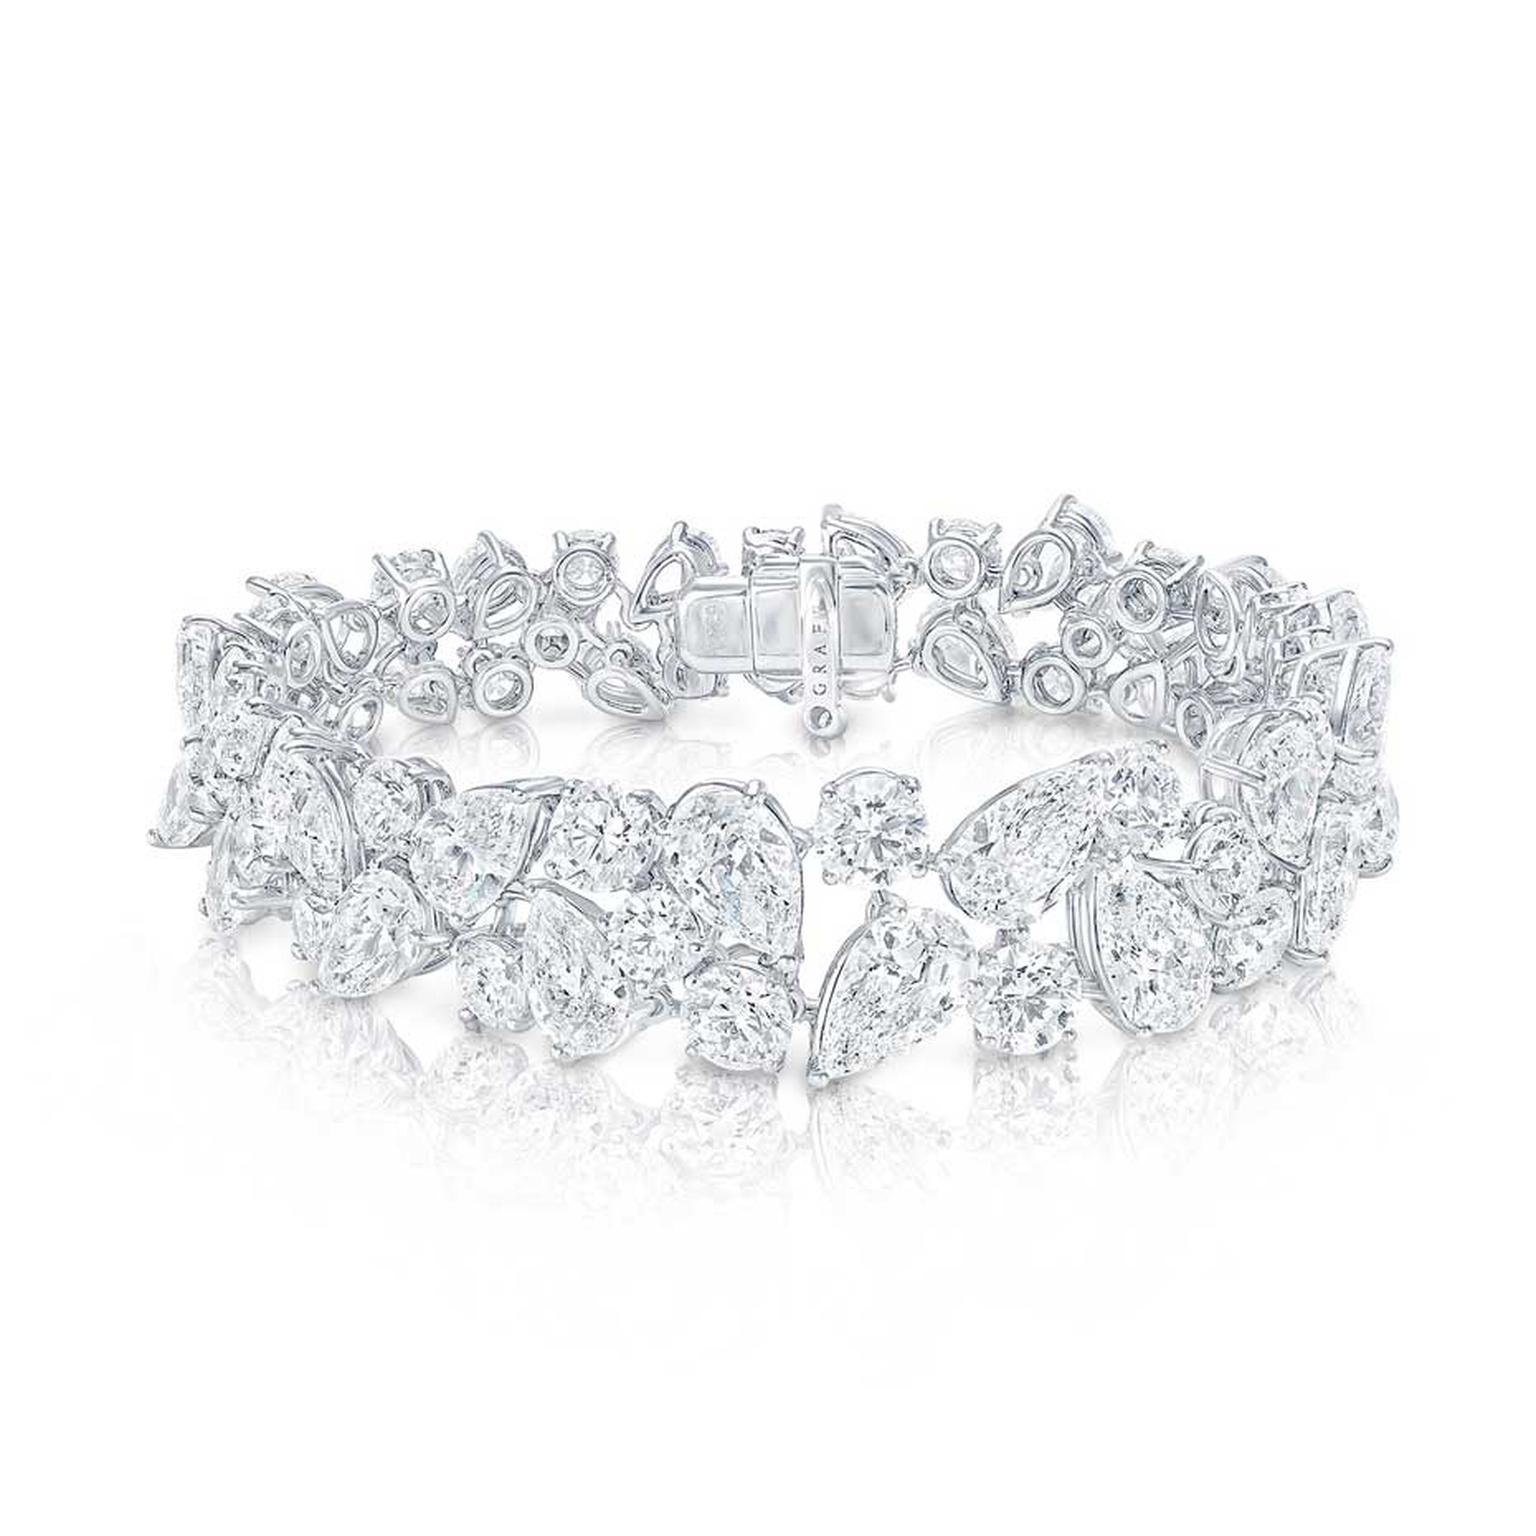 Graff Rhythm collection platinum bracelet featuring brilliant, pear and baguette-shaped diamonds.